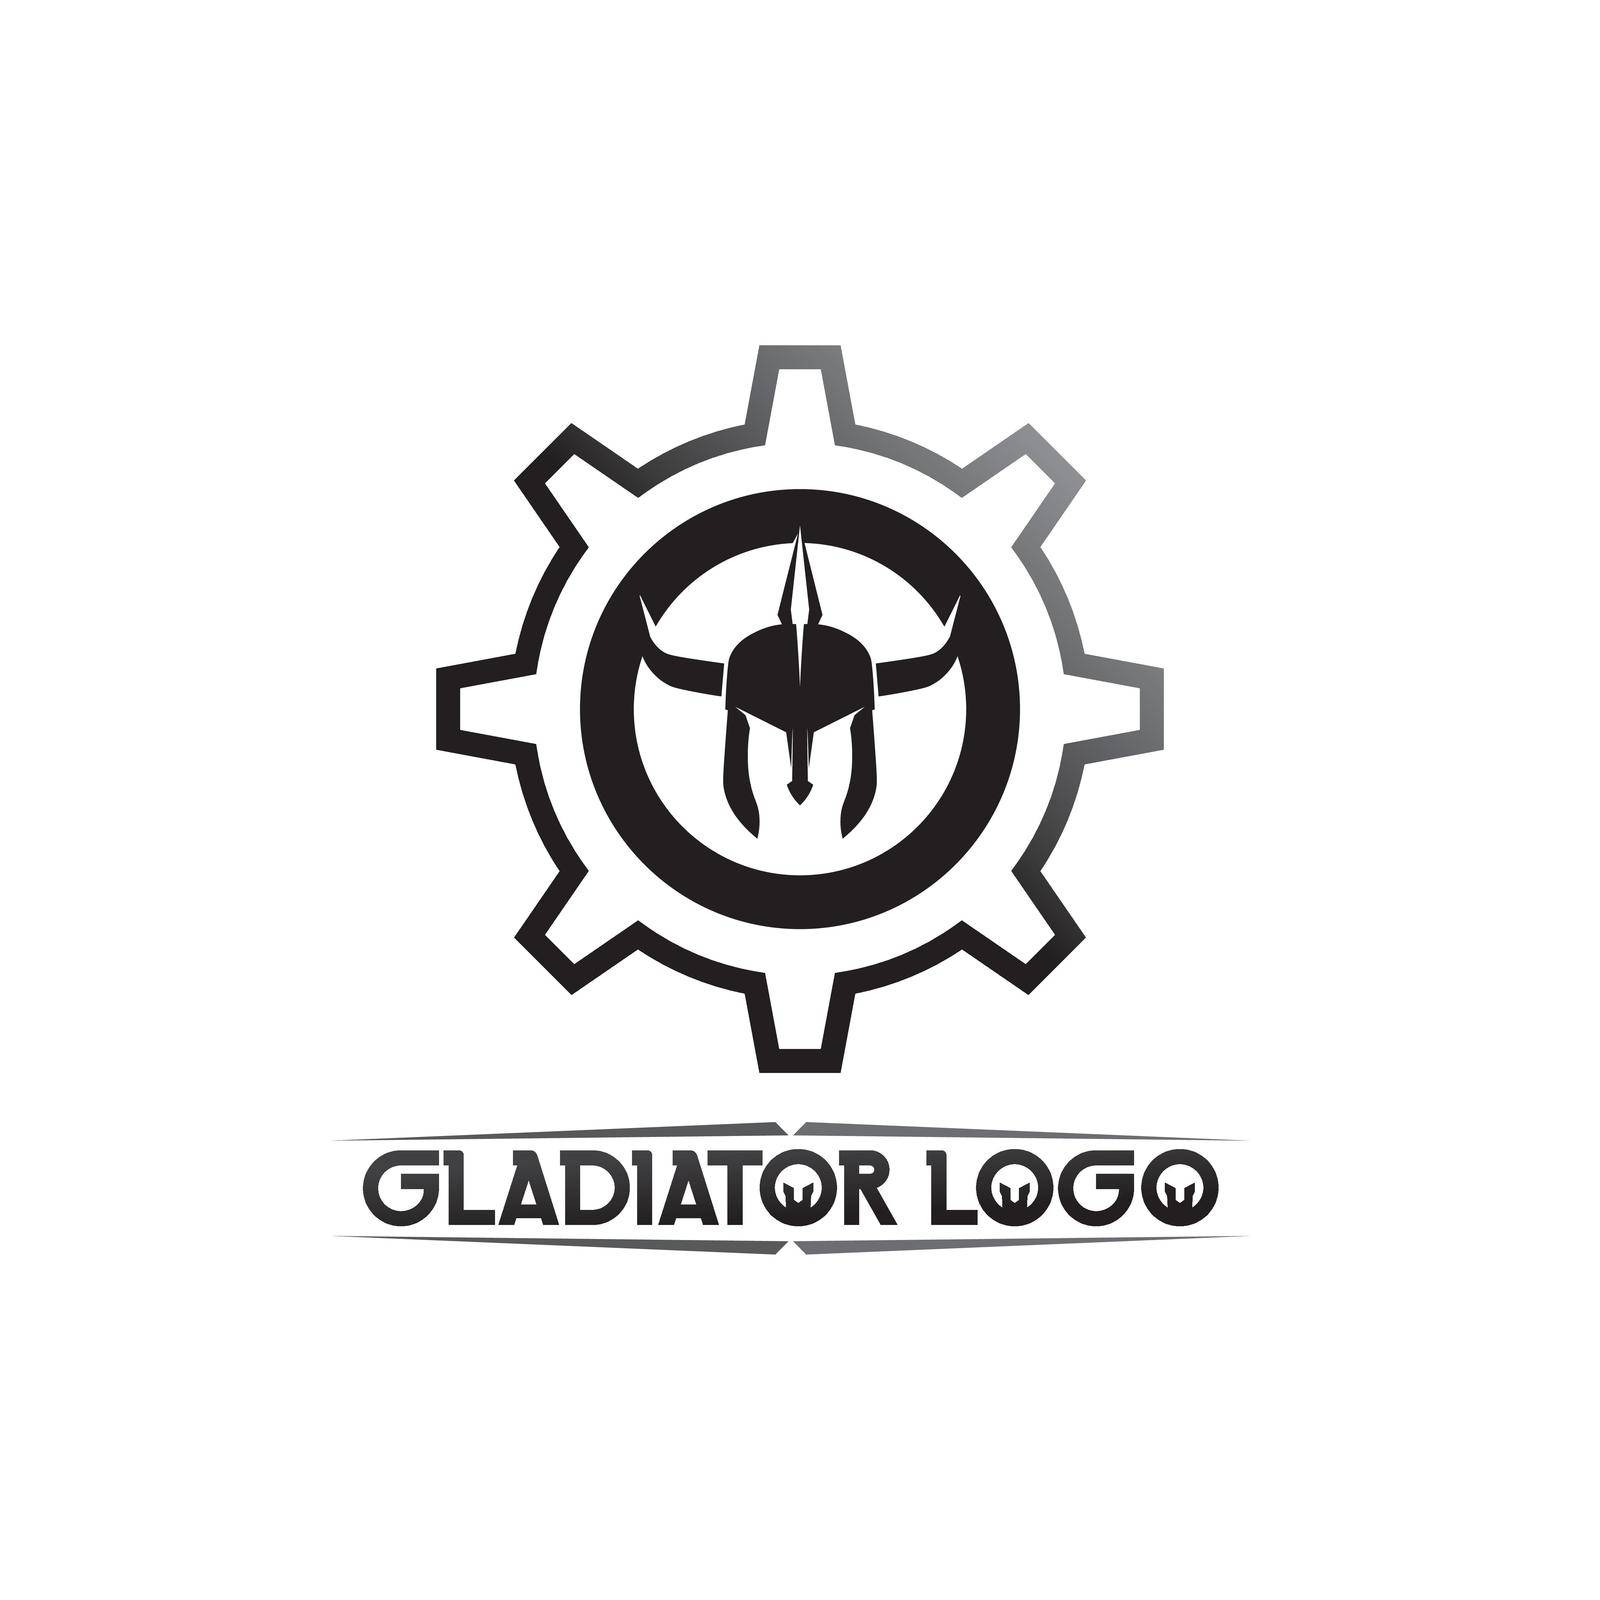 spartan logo black Glaiator and vector design helmet and head black by Anggasaputro